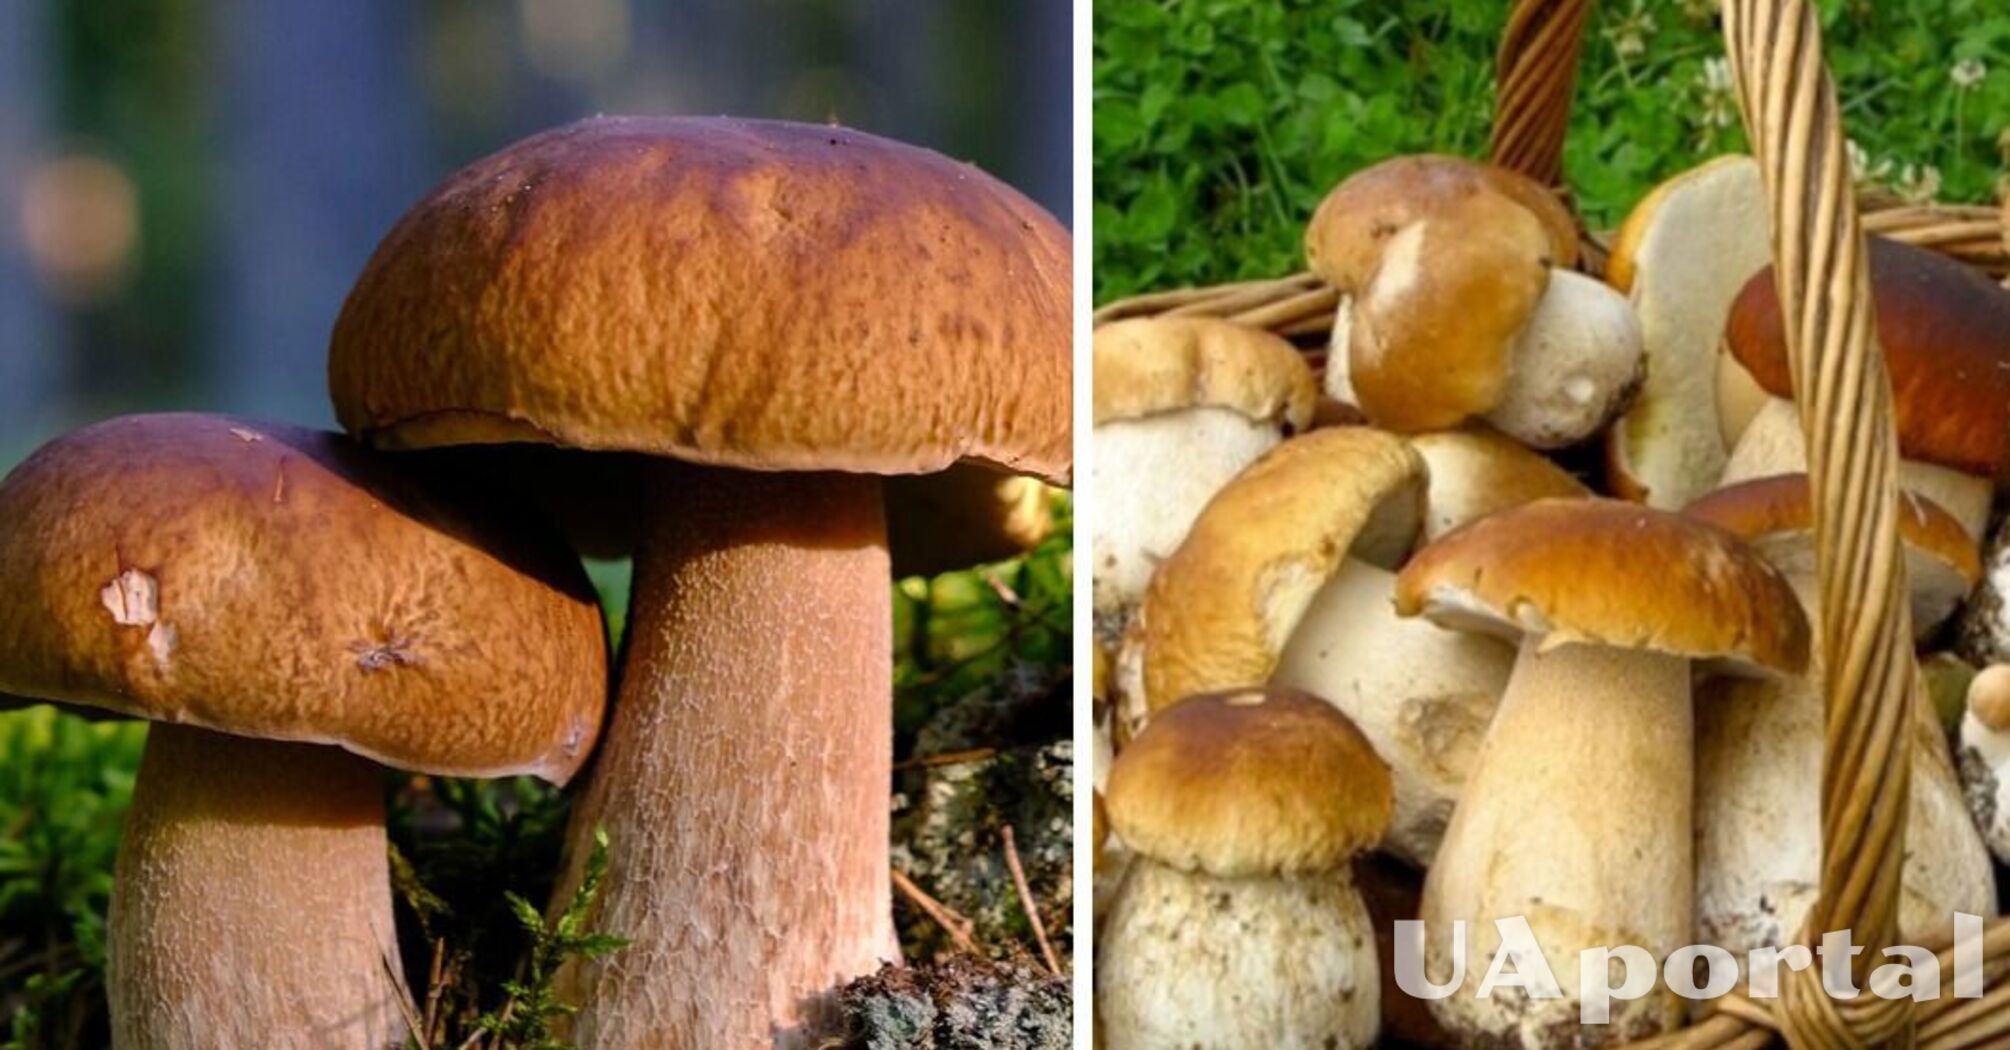 Where to look for porcini mushrooms: mushroom pickers reveal the secret 